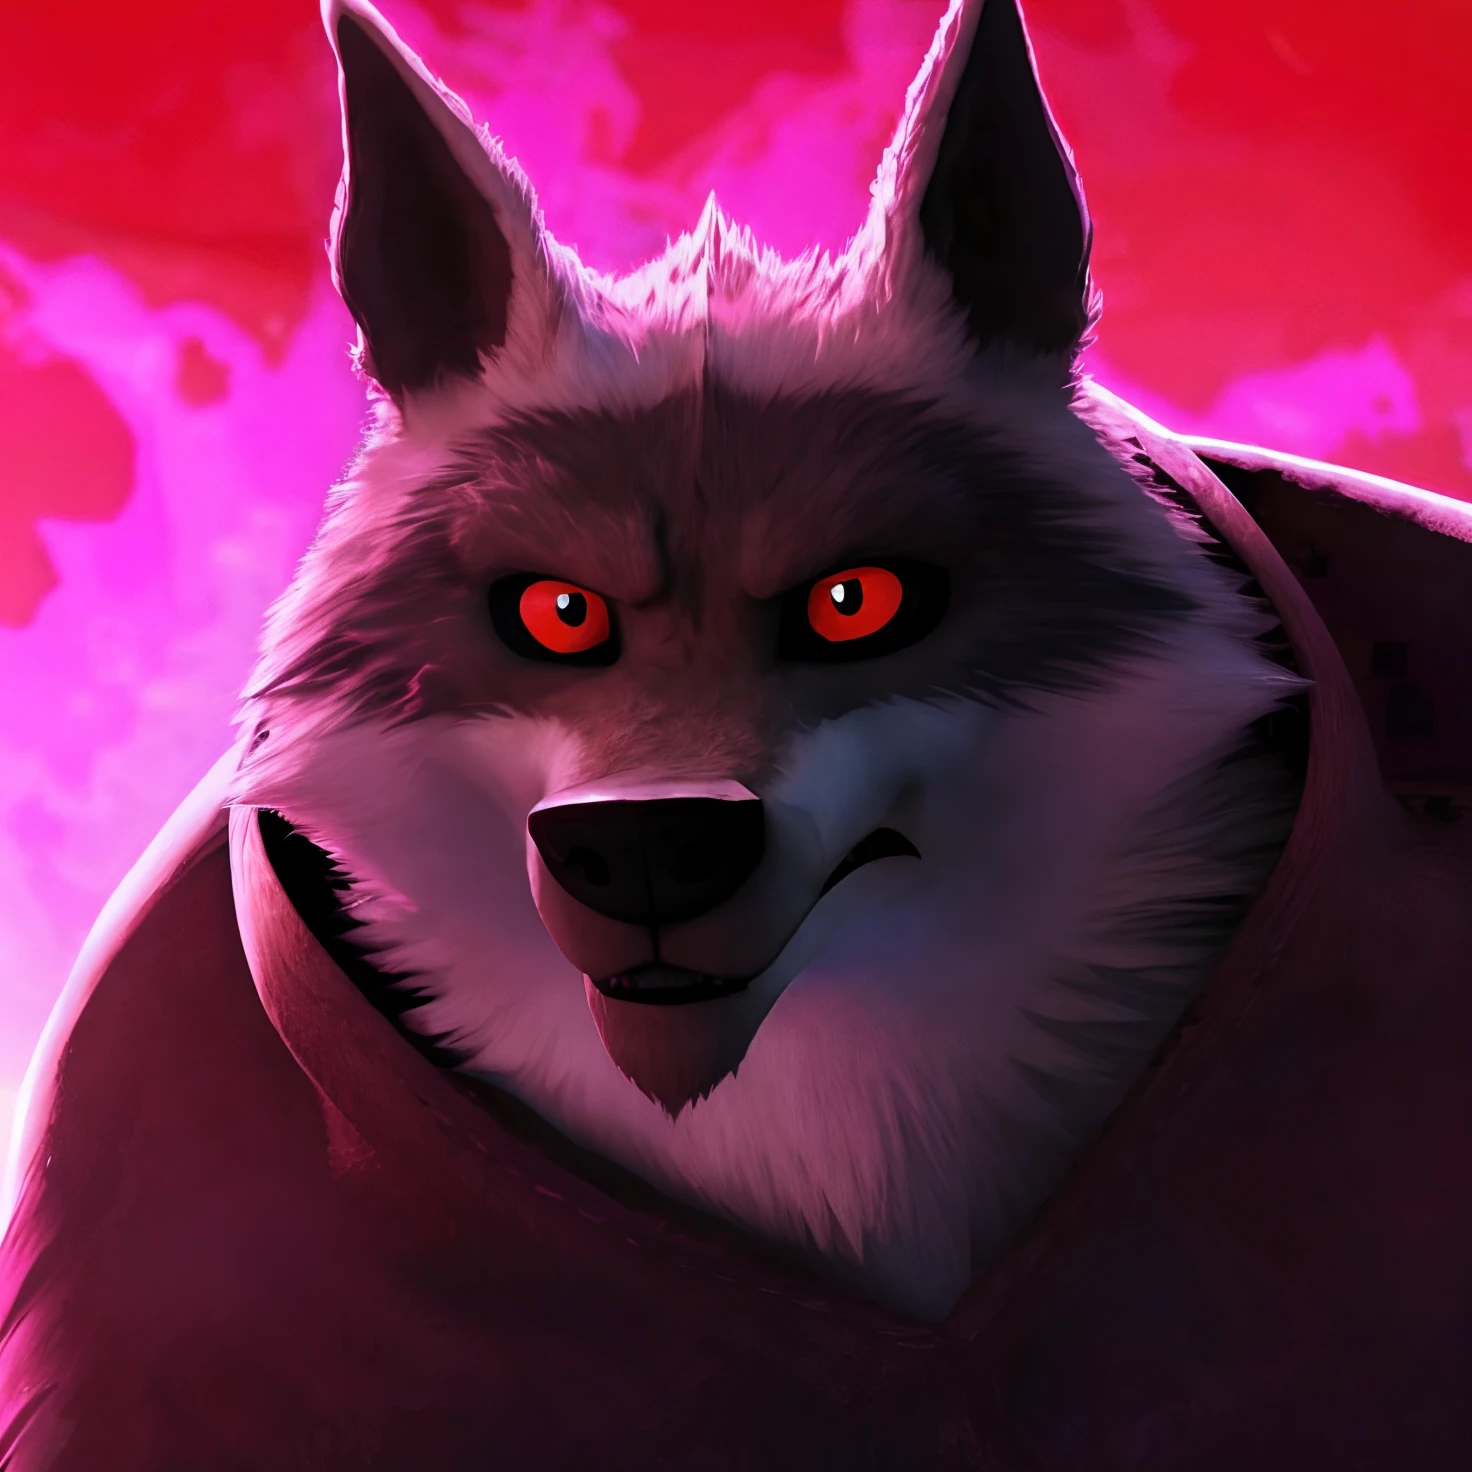 Death Wolf 그는 당신의 댓글이 마음에 들지 않았으며 이제 그는 인내심이 부족하고 다시 화가났습니다.